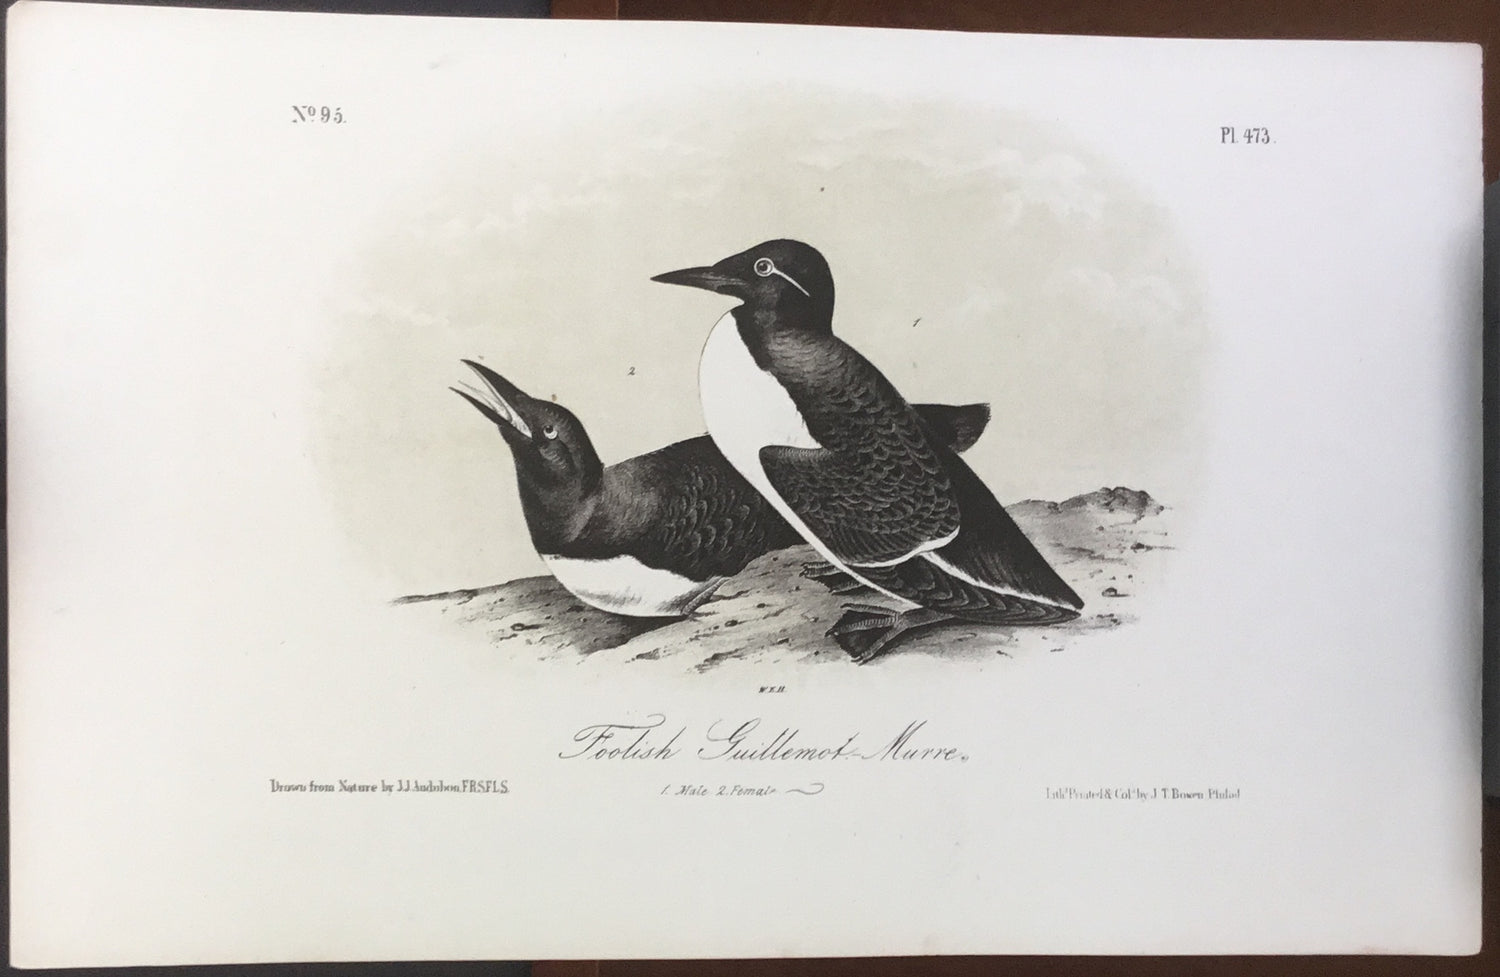 Audubon Octavo Foolish Guillemot Murre, plate 473, uncolored test sheet, 7 x 11